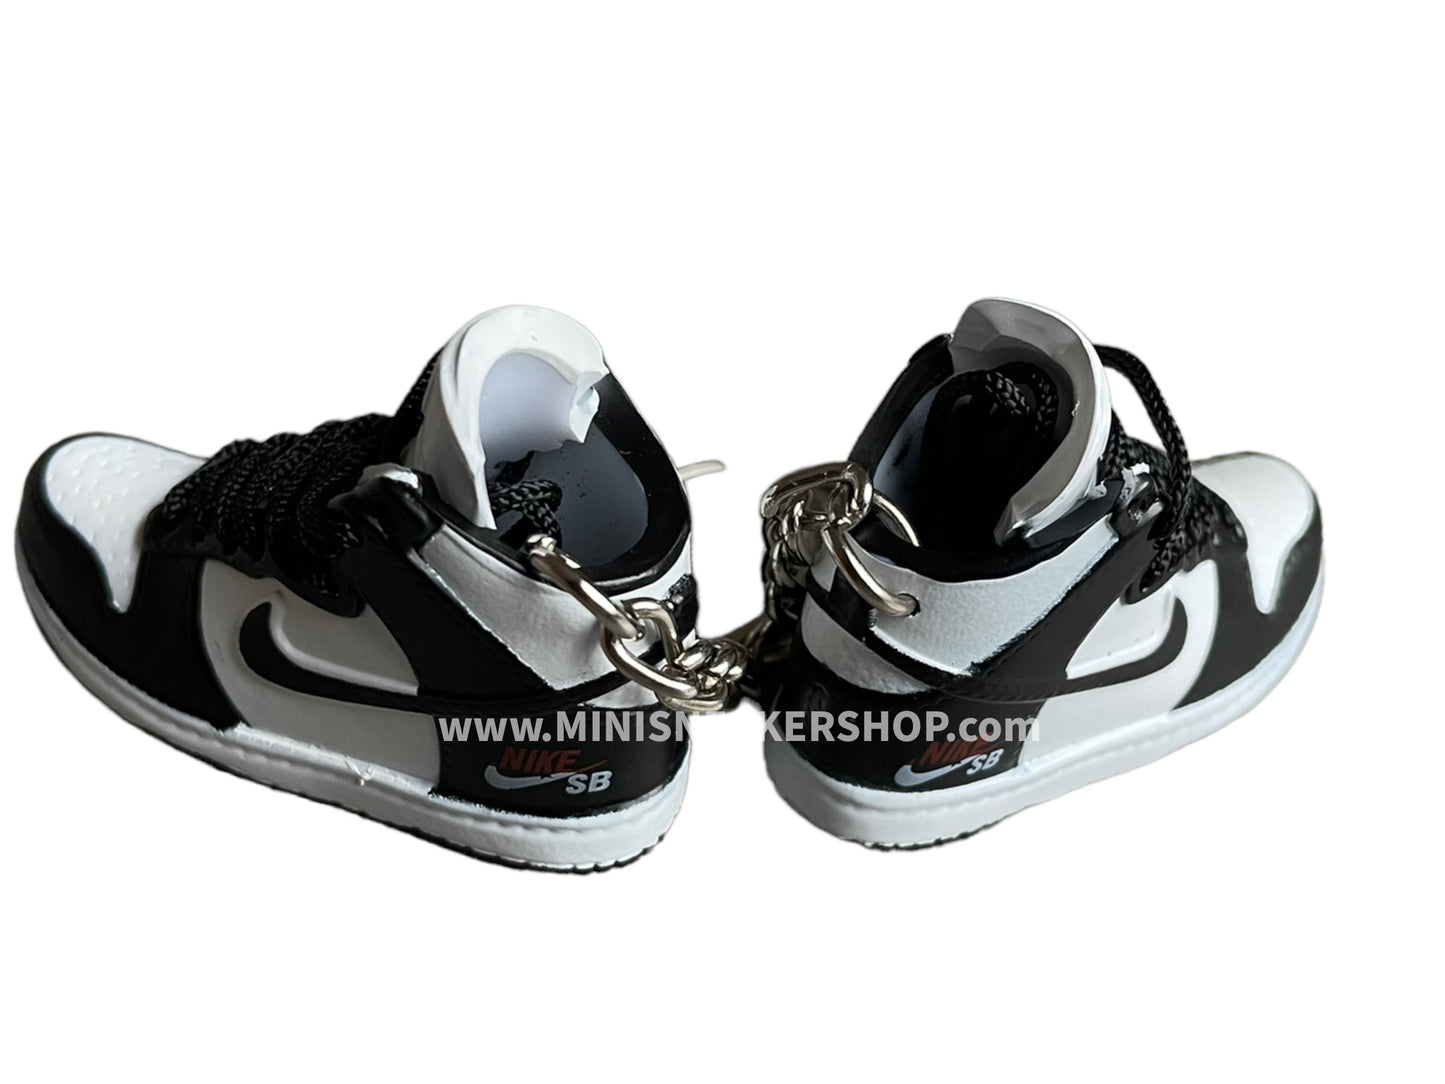 Mini sneaker keychain 3D Dunk - HI SB Black White